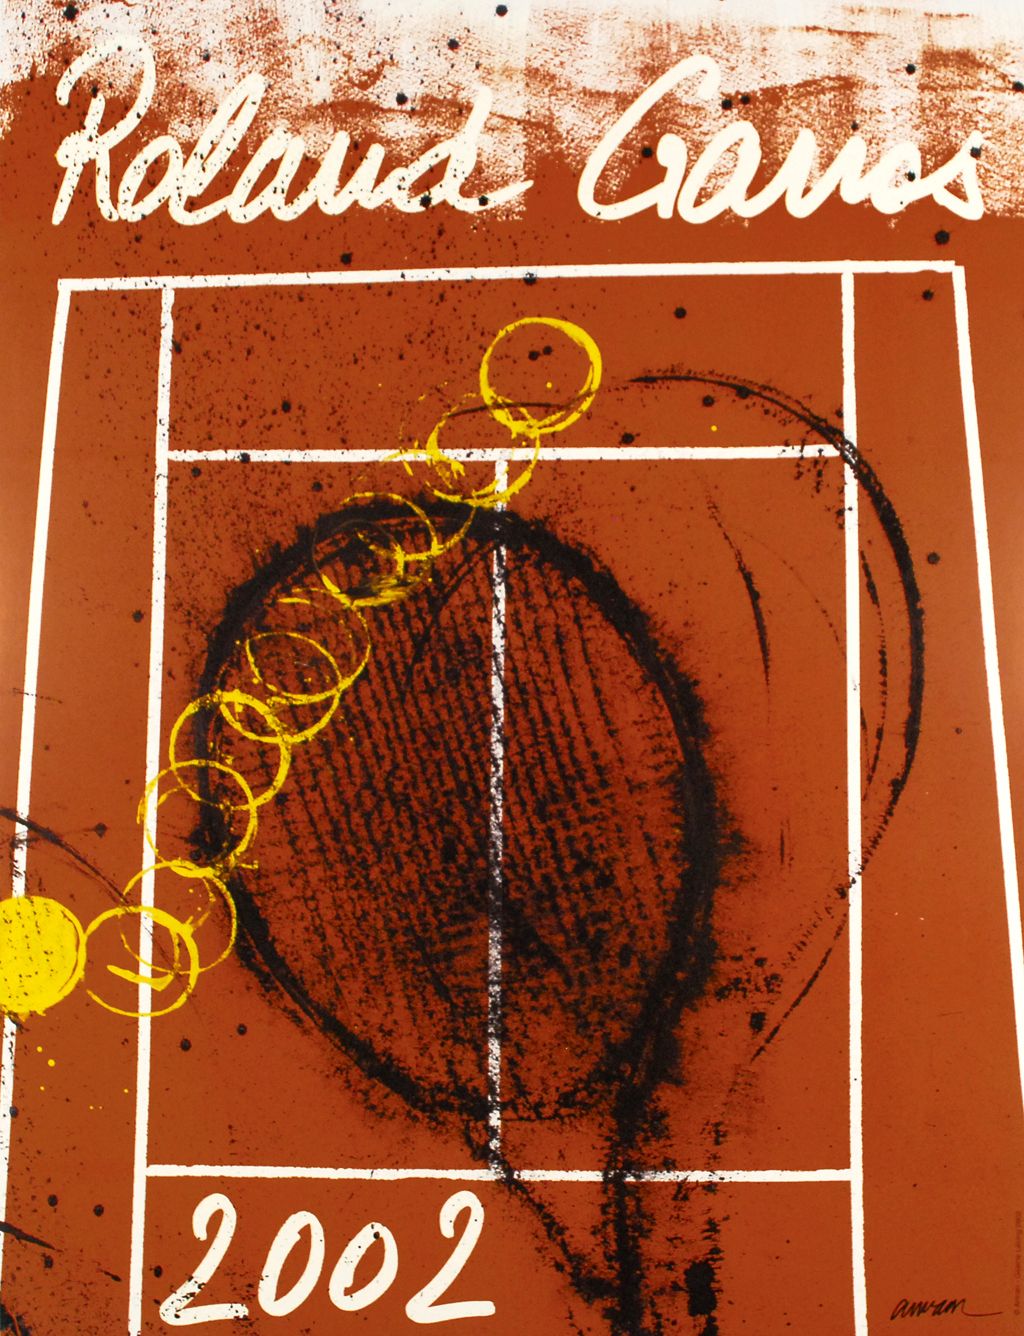 ARMAN Arman Fernandez (1928 - 2005)

Roland Garros, 2002

Offset poster edited b&hellip;